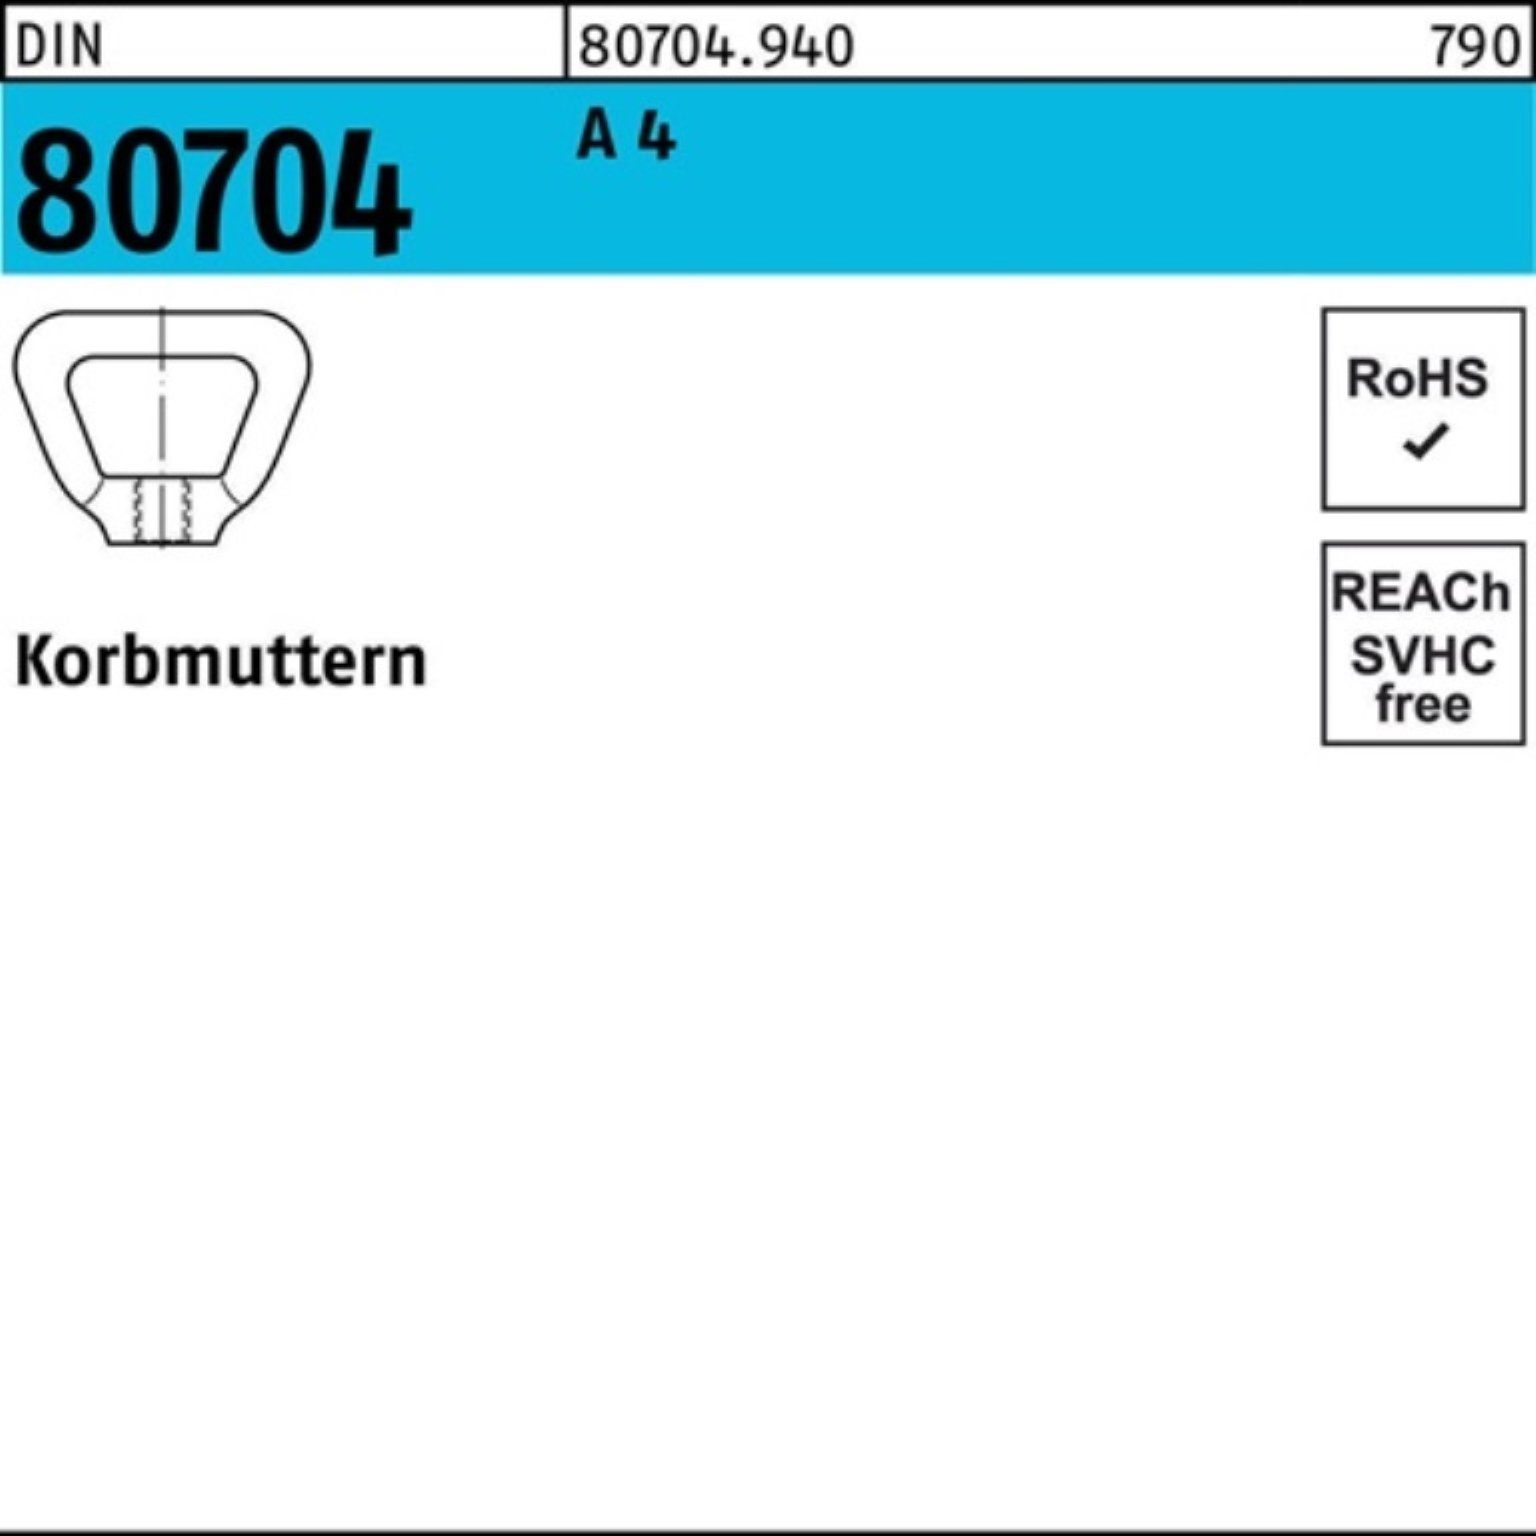 Stück Reyher 100er M16 DIN 80704 Korbmutter Korbmut Pack A DIN 4 Korbmutter 80704 1 A 4